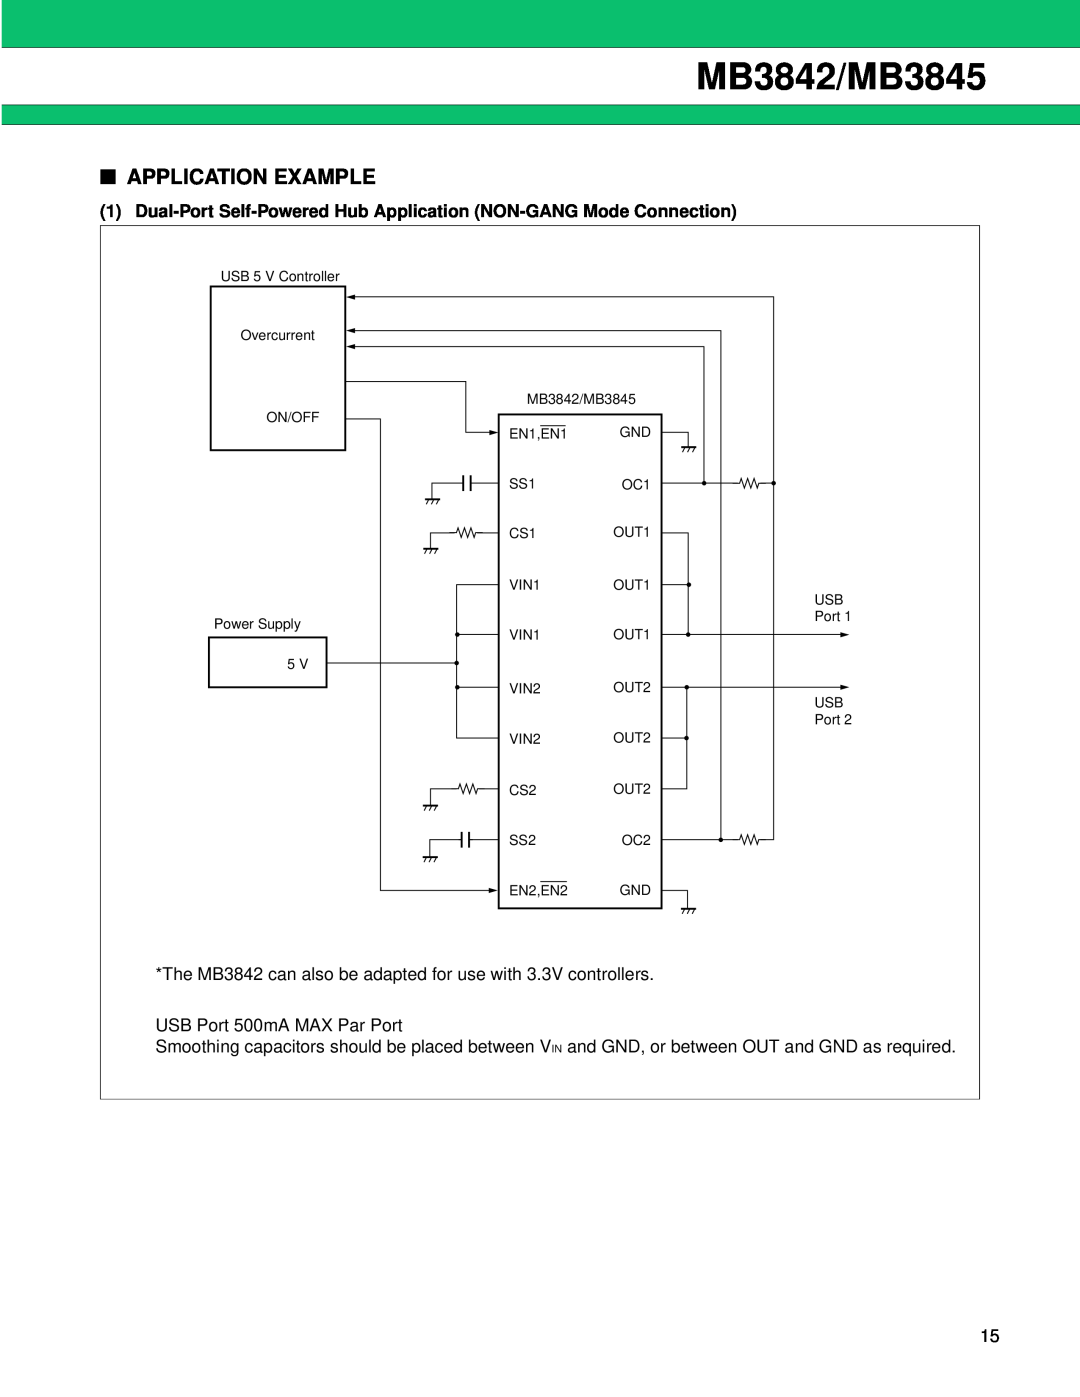 Fujitsu manual Application Example, MB3842/MB3845, Dual-Port Self-Powered Hub Application NON-GANG Mode Connection 